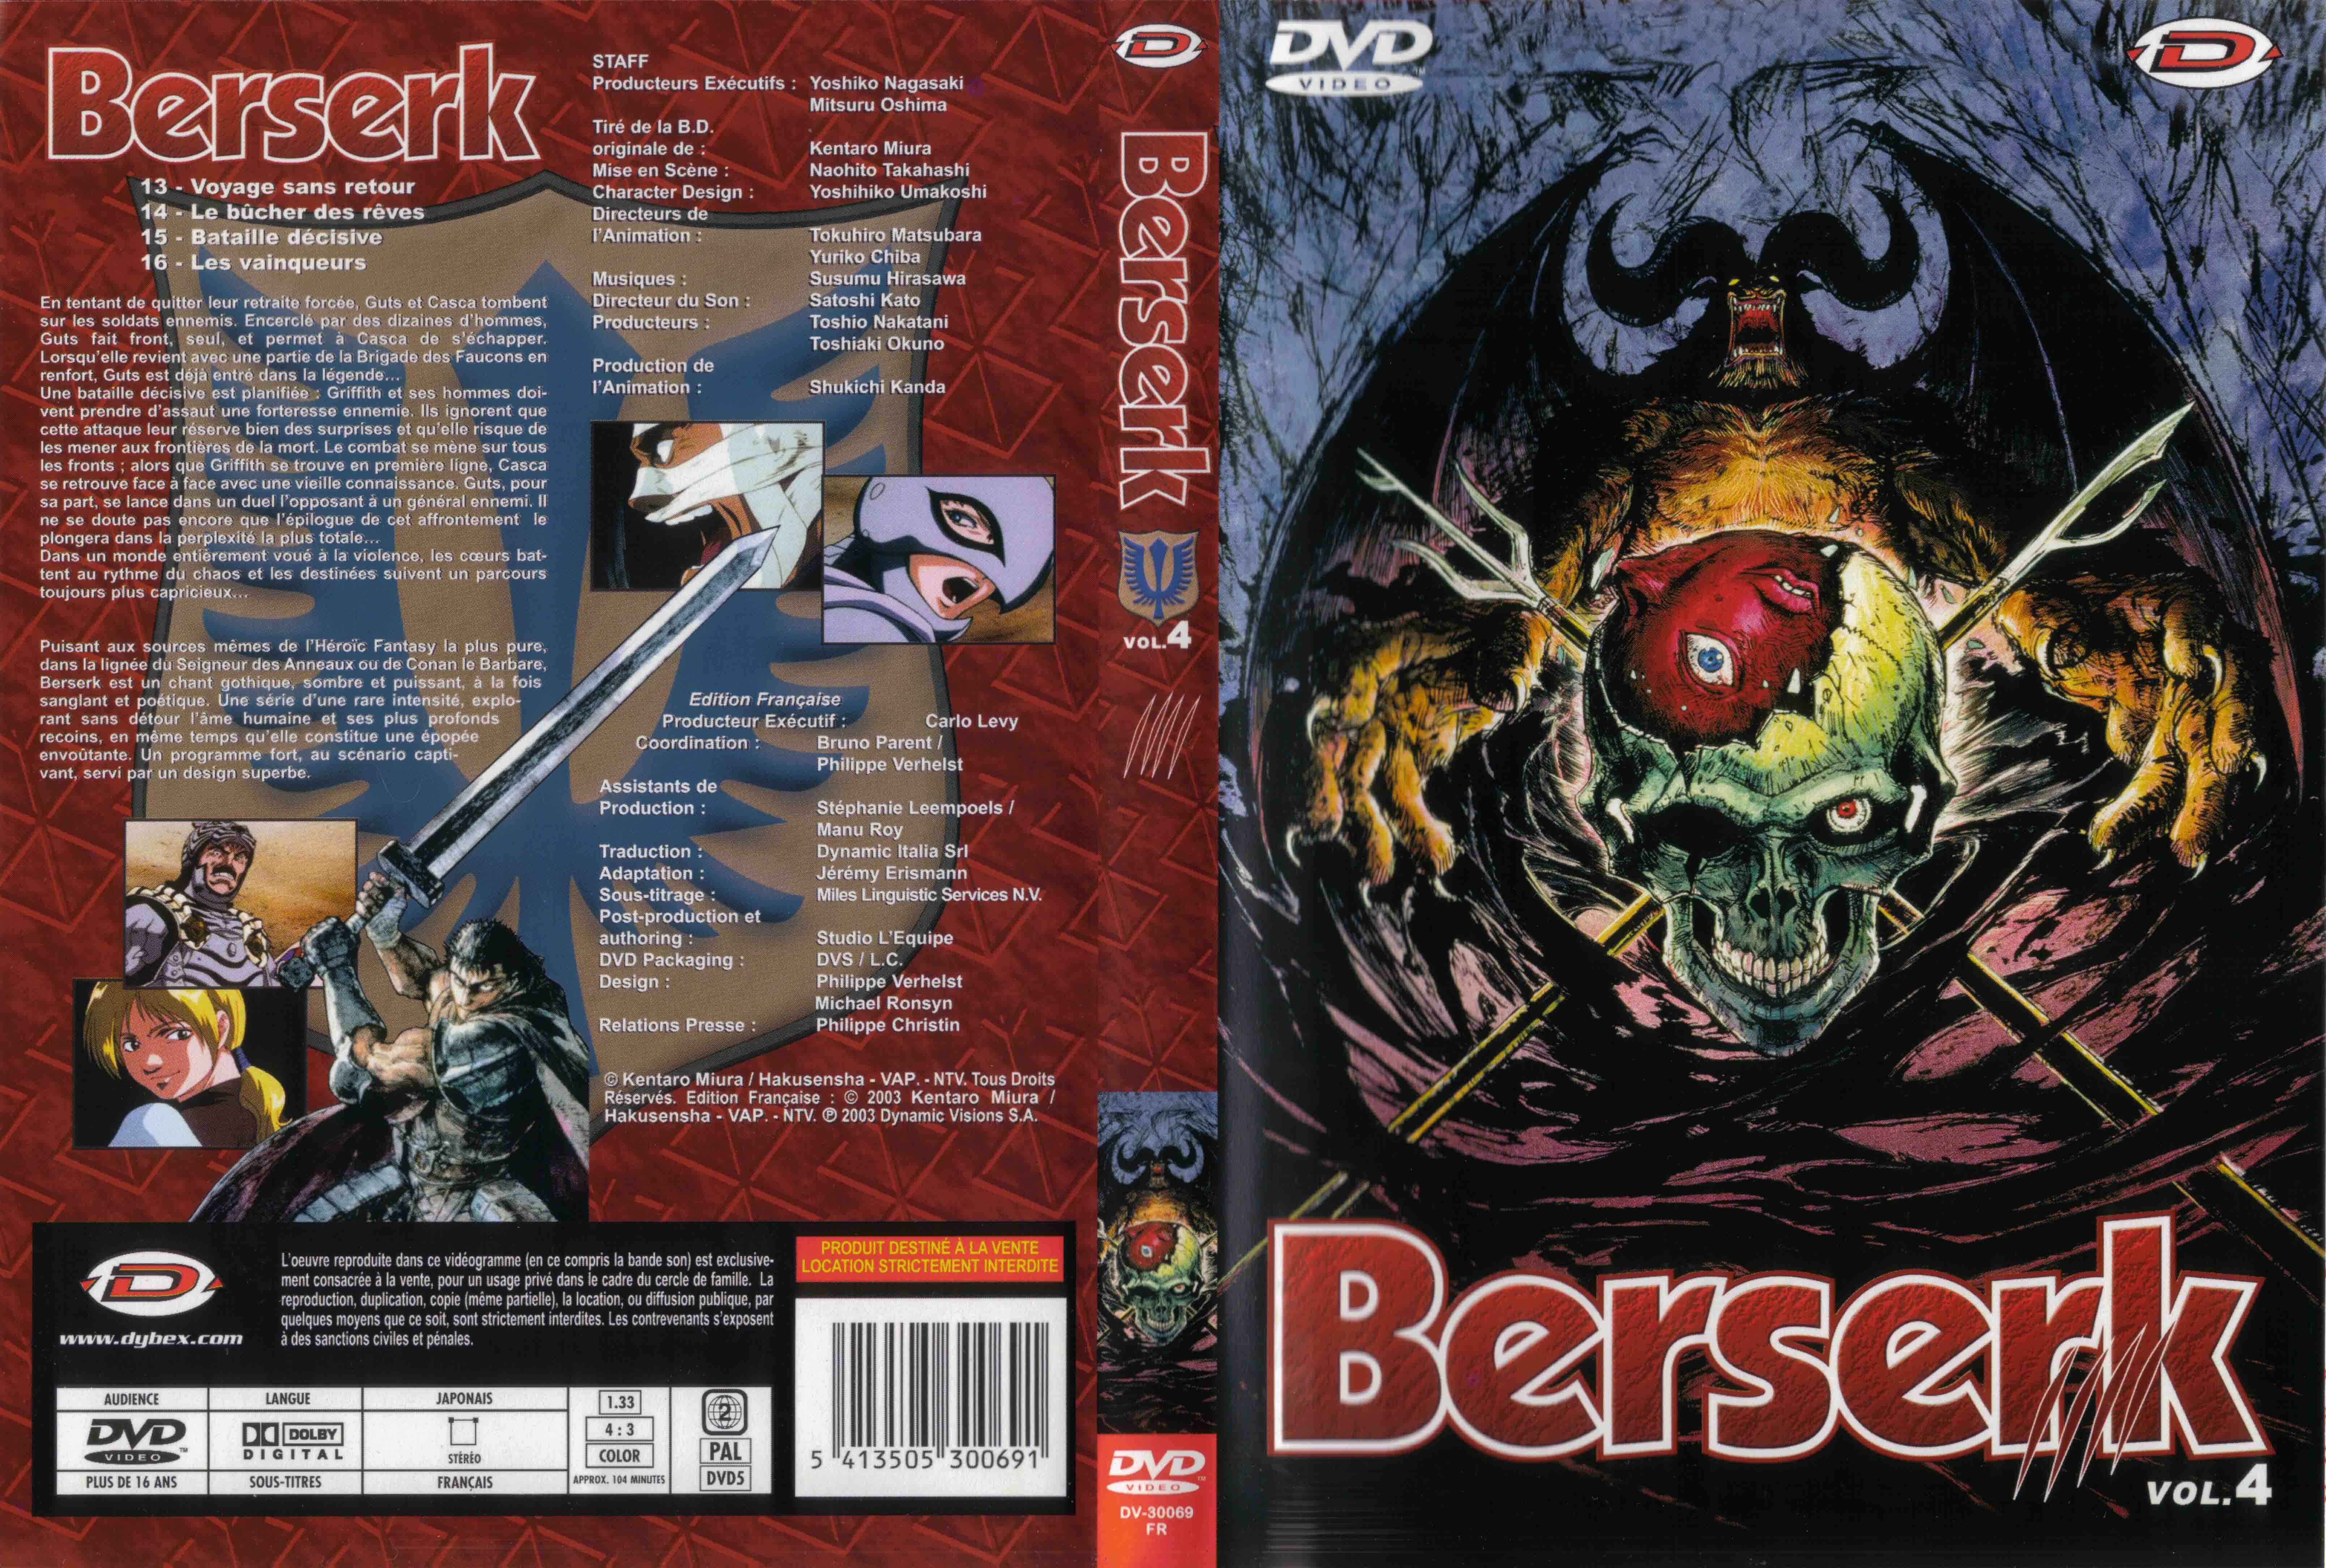 Jaquette DVD Berserk vol 4